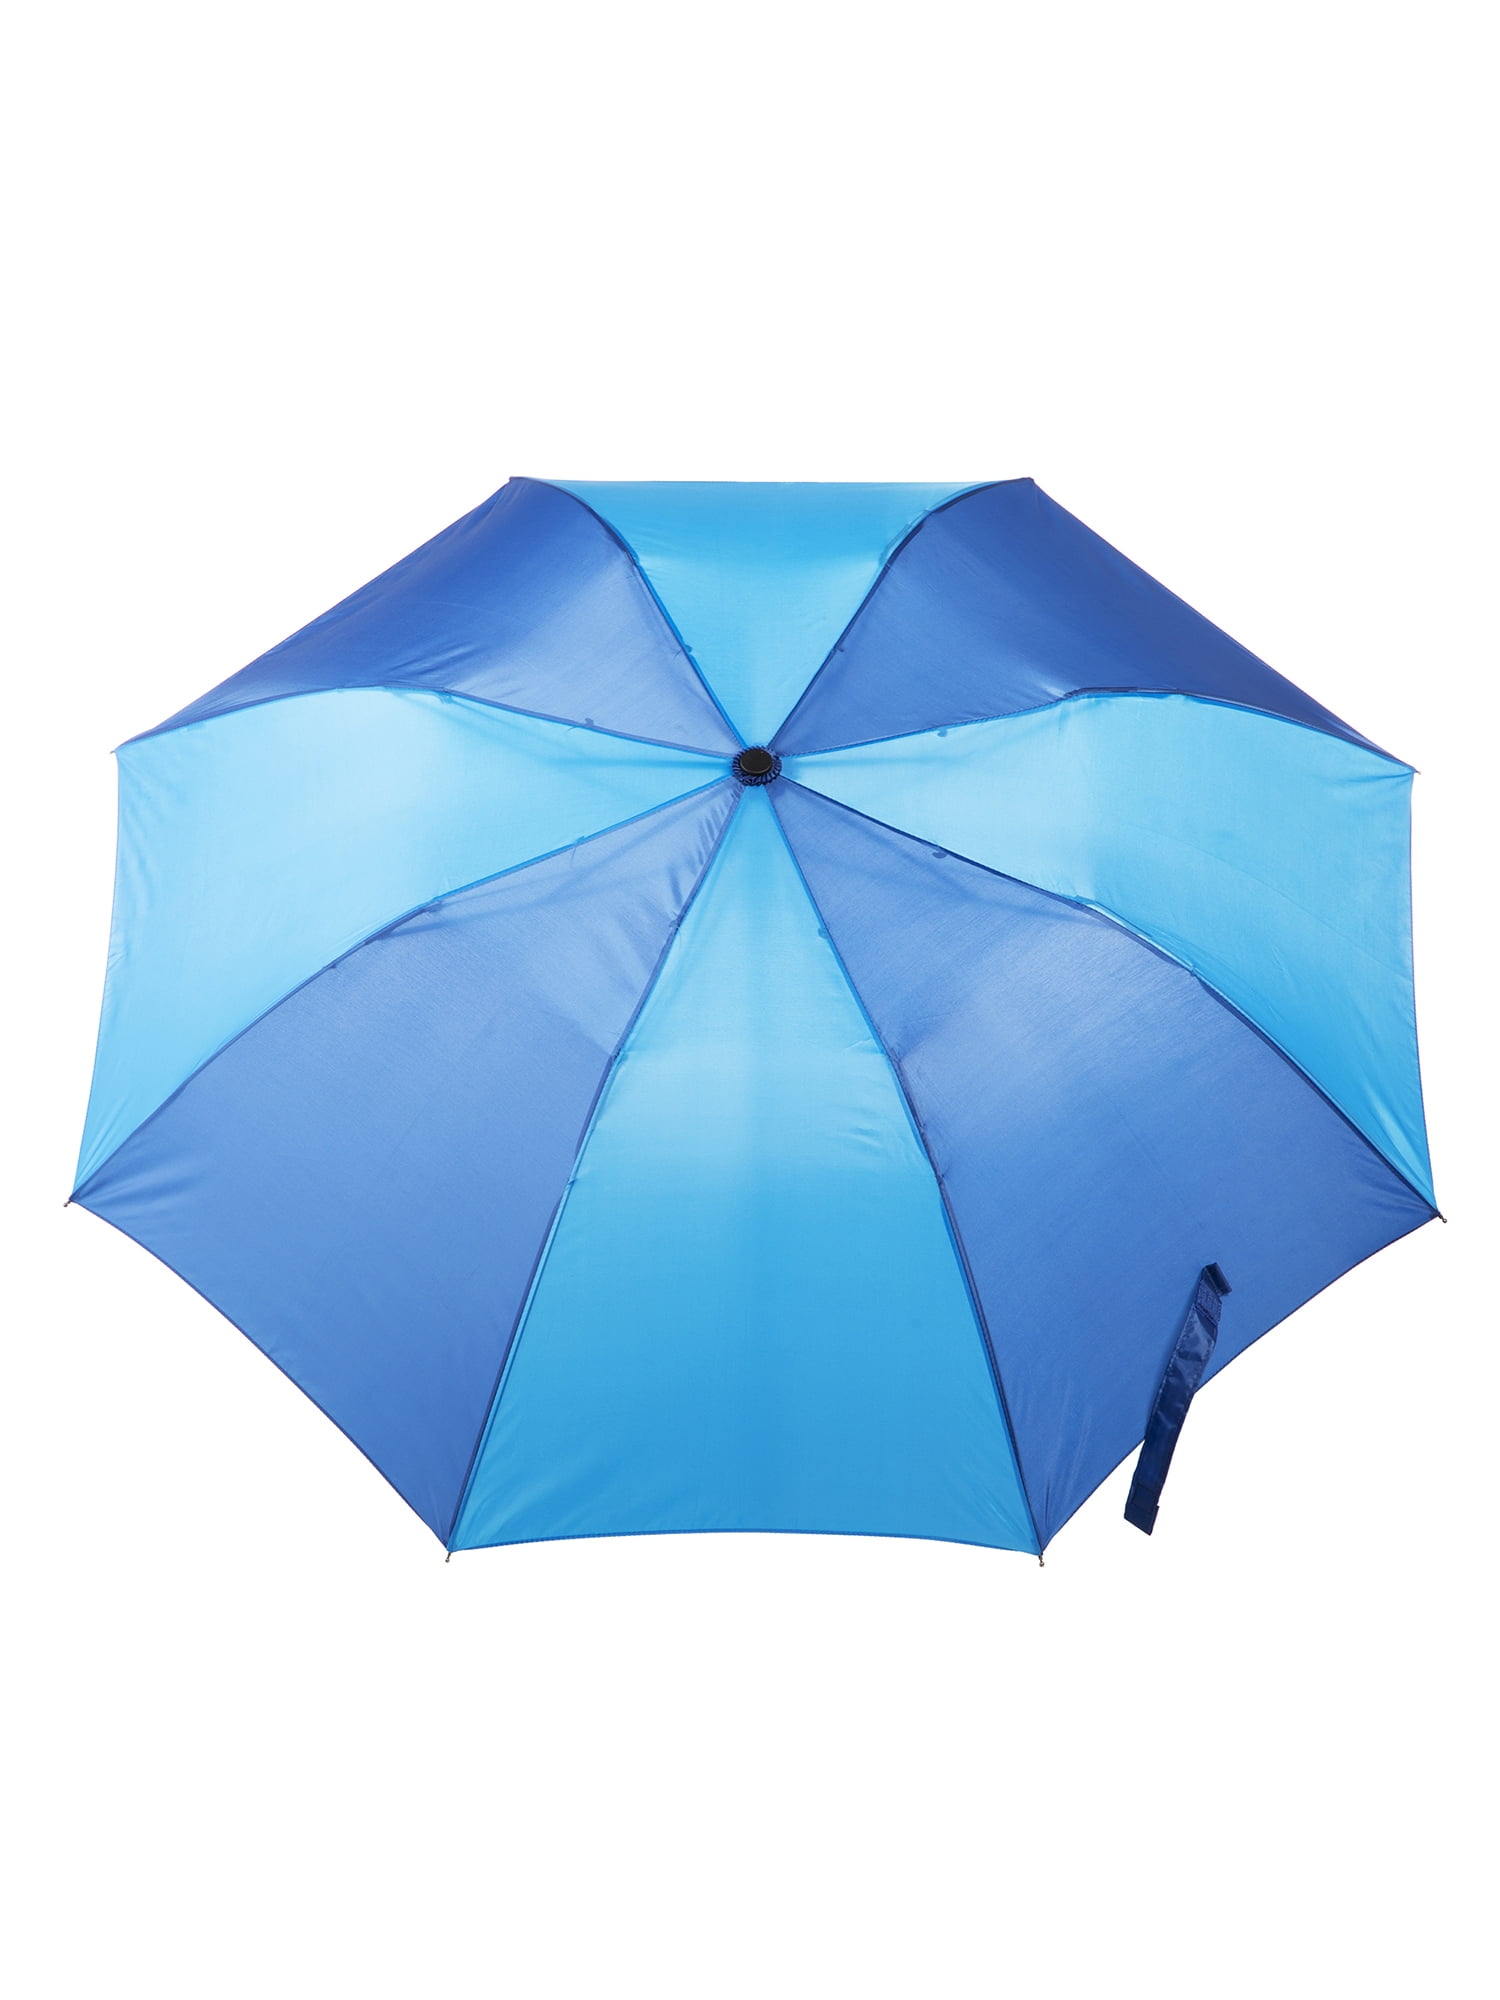 Totes Auto Open Umbrella with NeverWet - Walmart.com